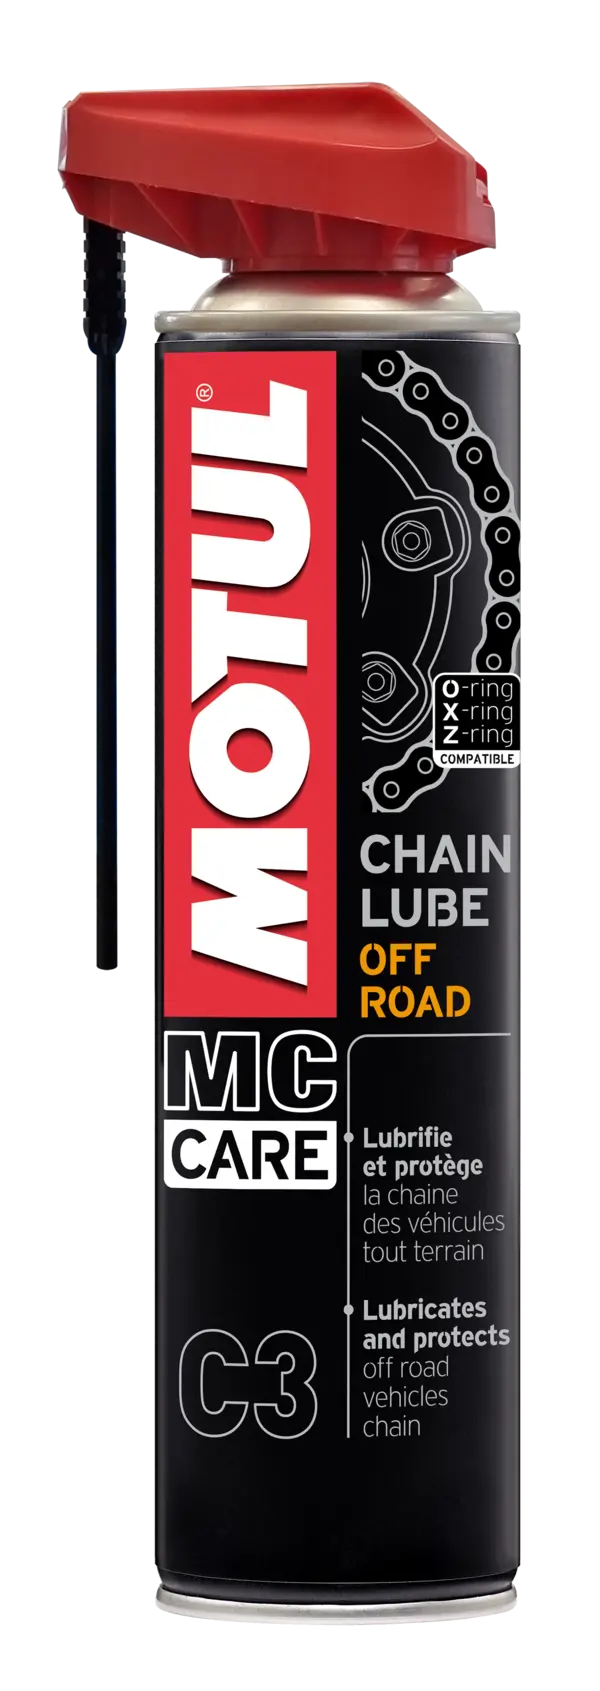 Chain Lube Off Road MC Care C3 Motul Graisse Chaîne Moto Cross et Enduro